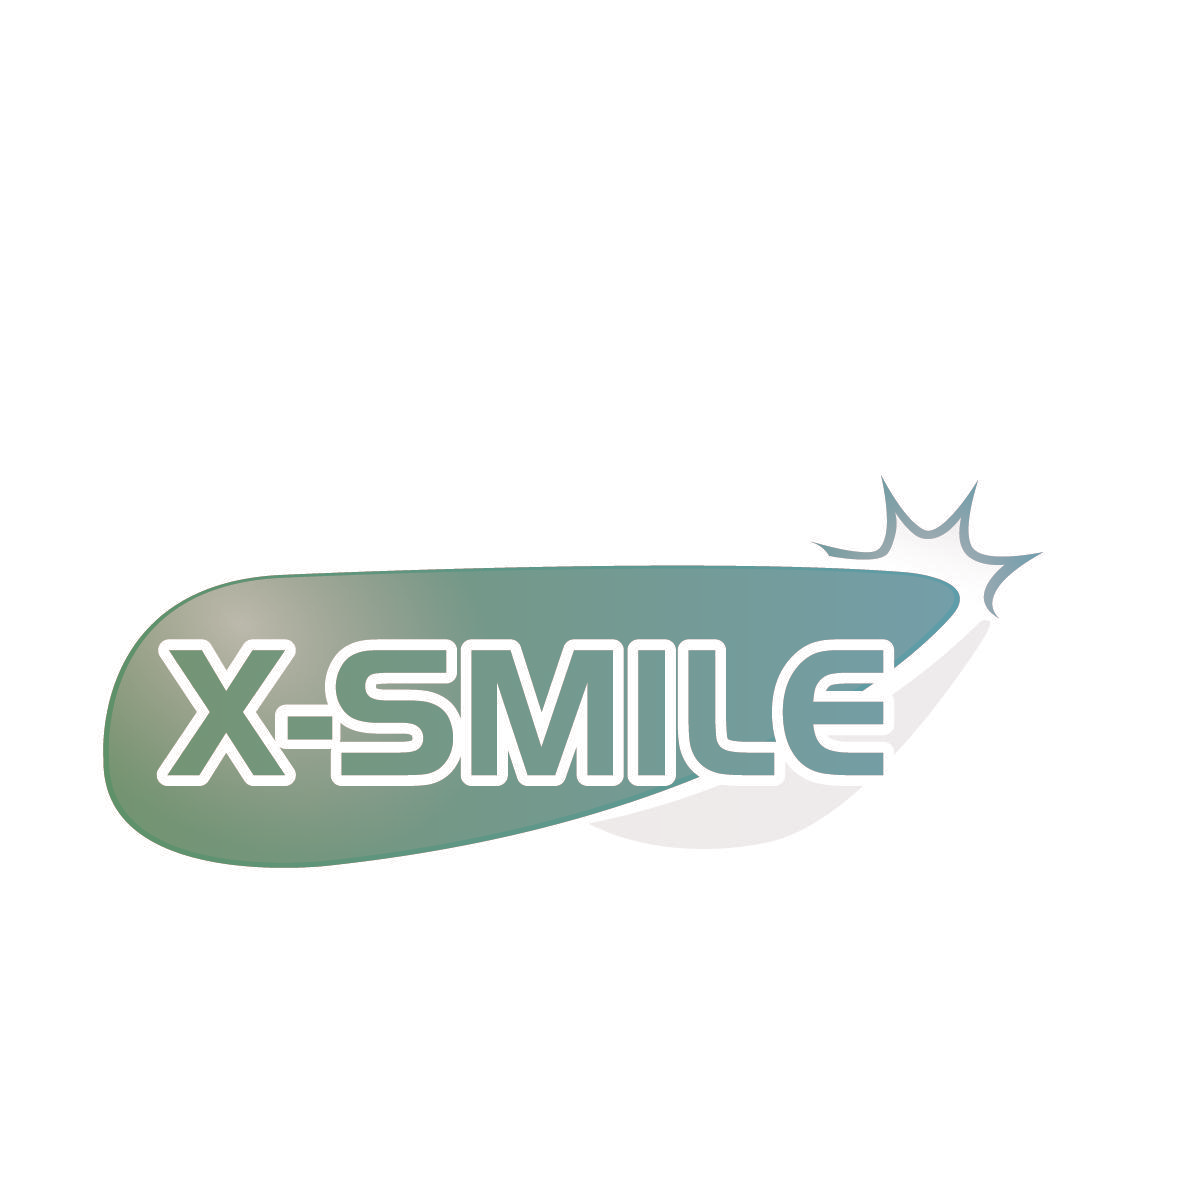 X-SMILE